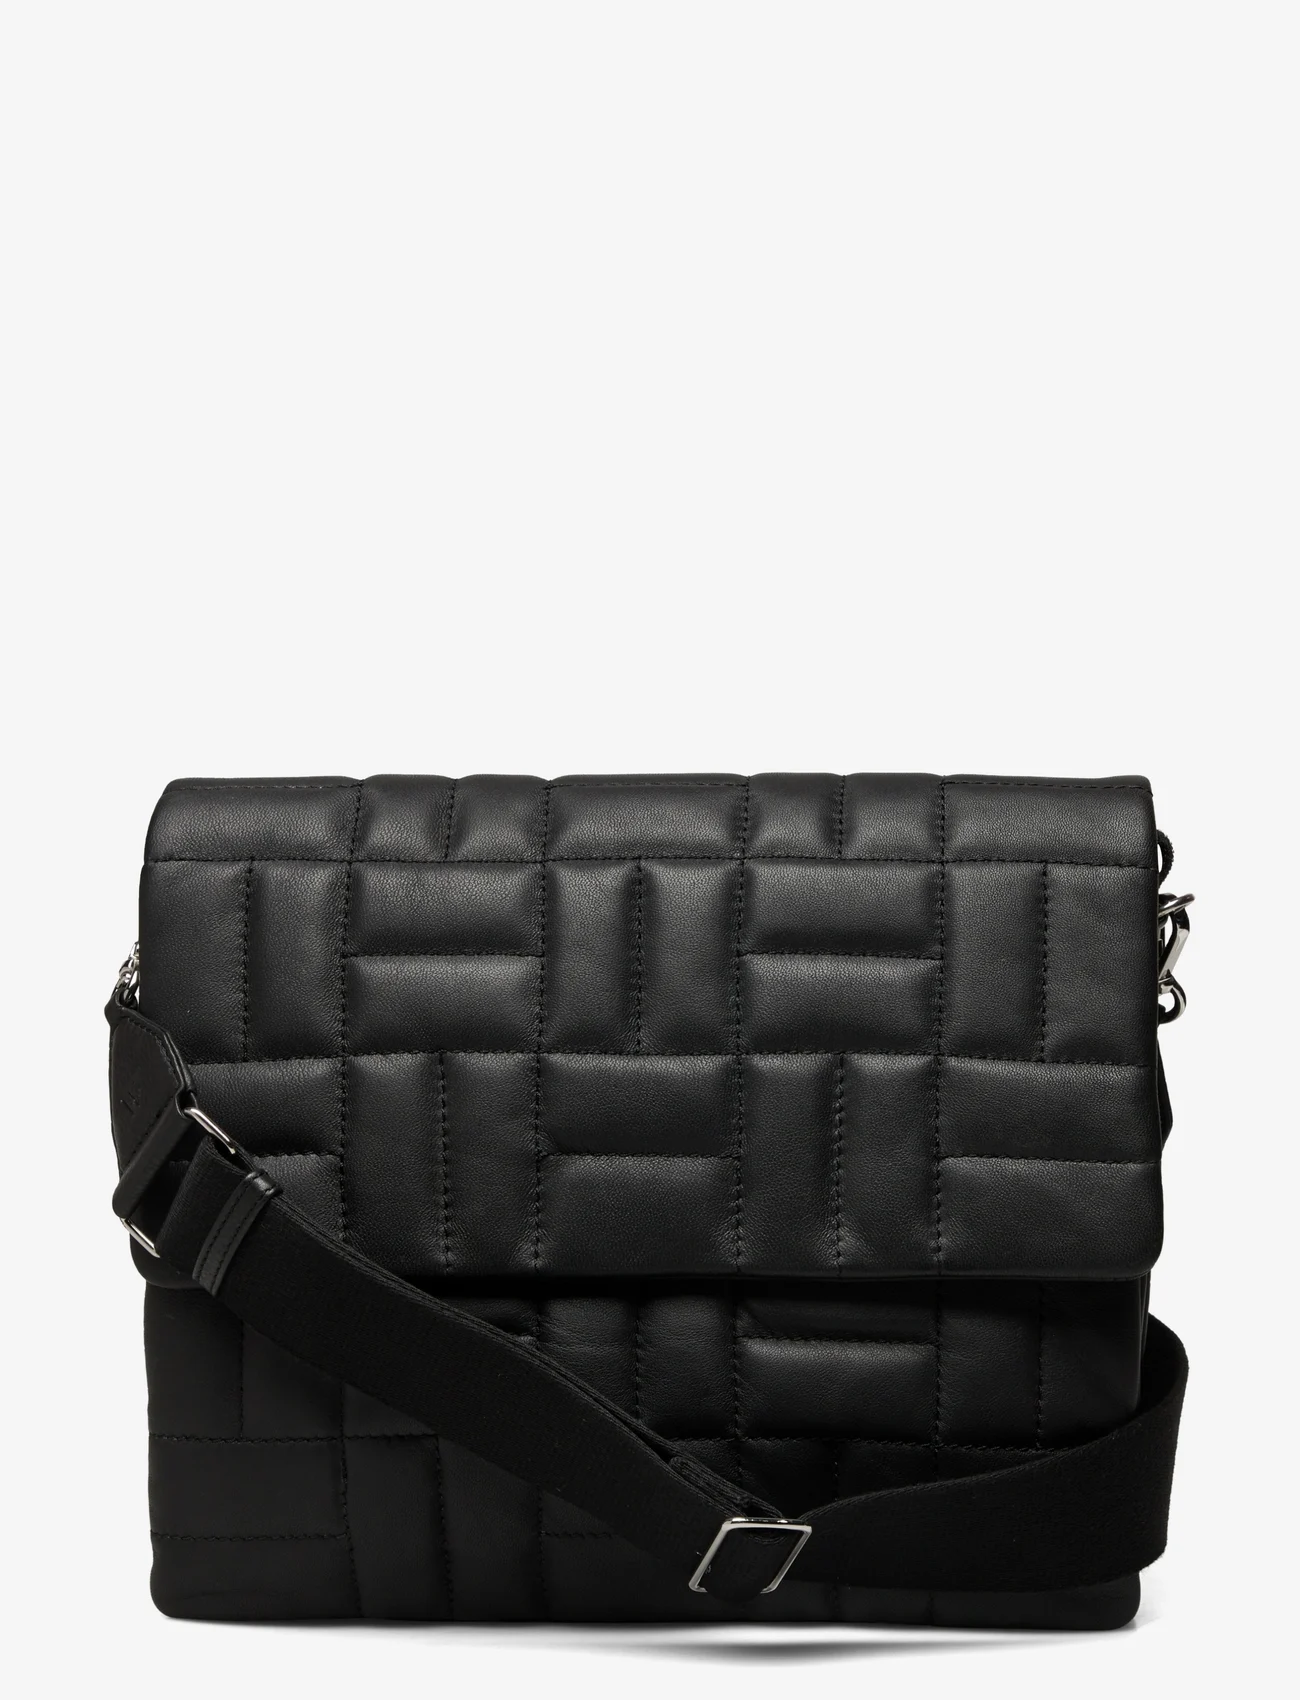 Markberg - NormaMBG Crossbody Bag, Bricks - födelsedagspresenter - black w/black - 0